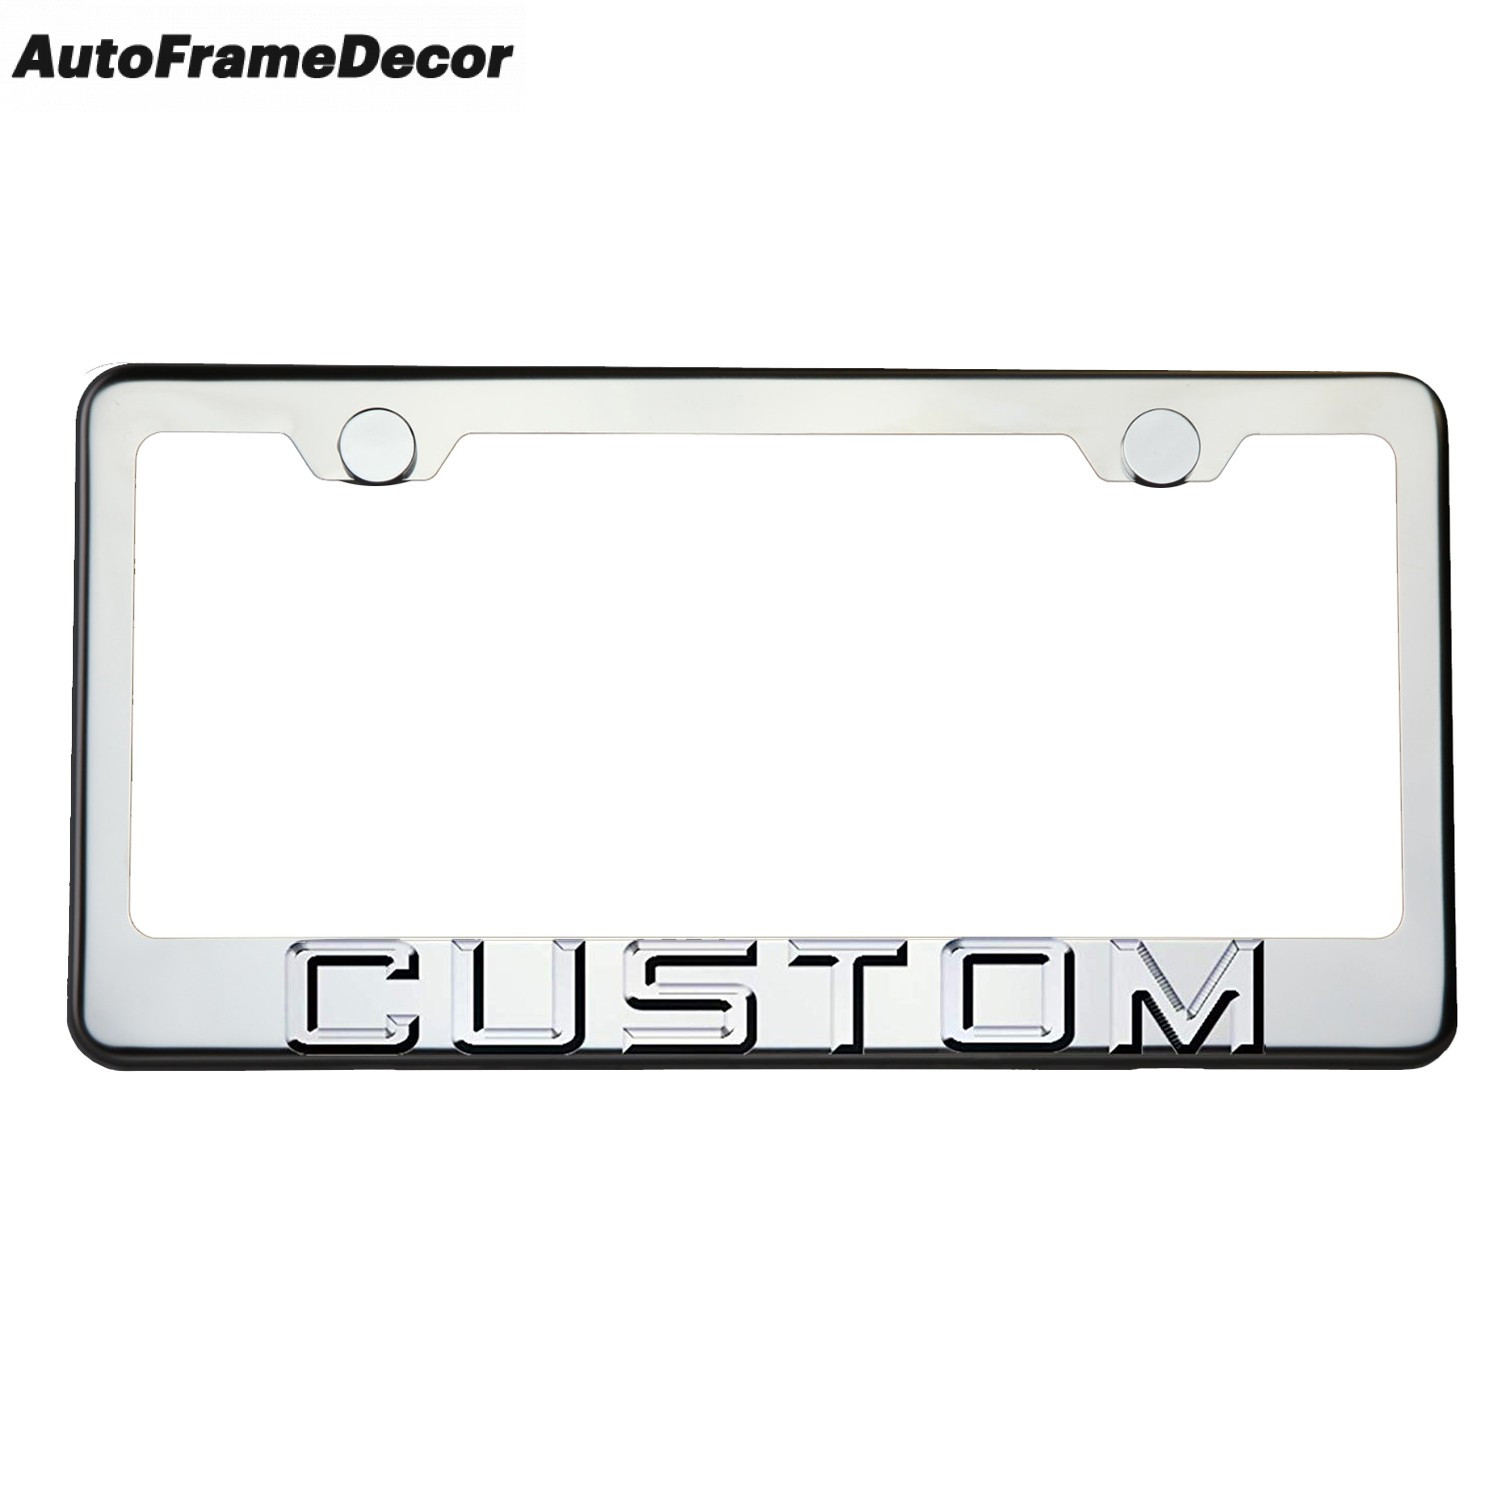 3D AUTOBIOGRAPHY Badge Emblem Stainless Steel Chrome Metal License Plate Frame Holder For Range Rover